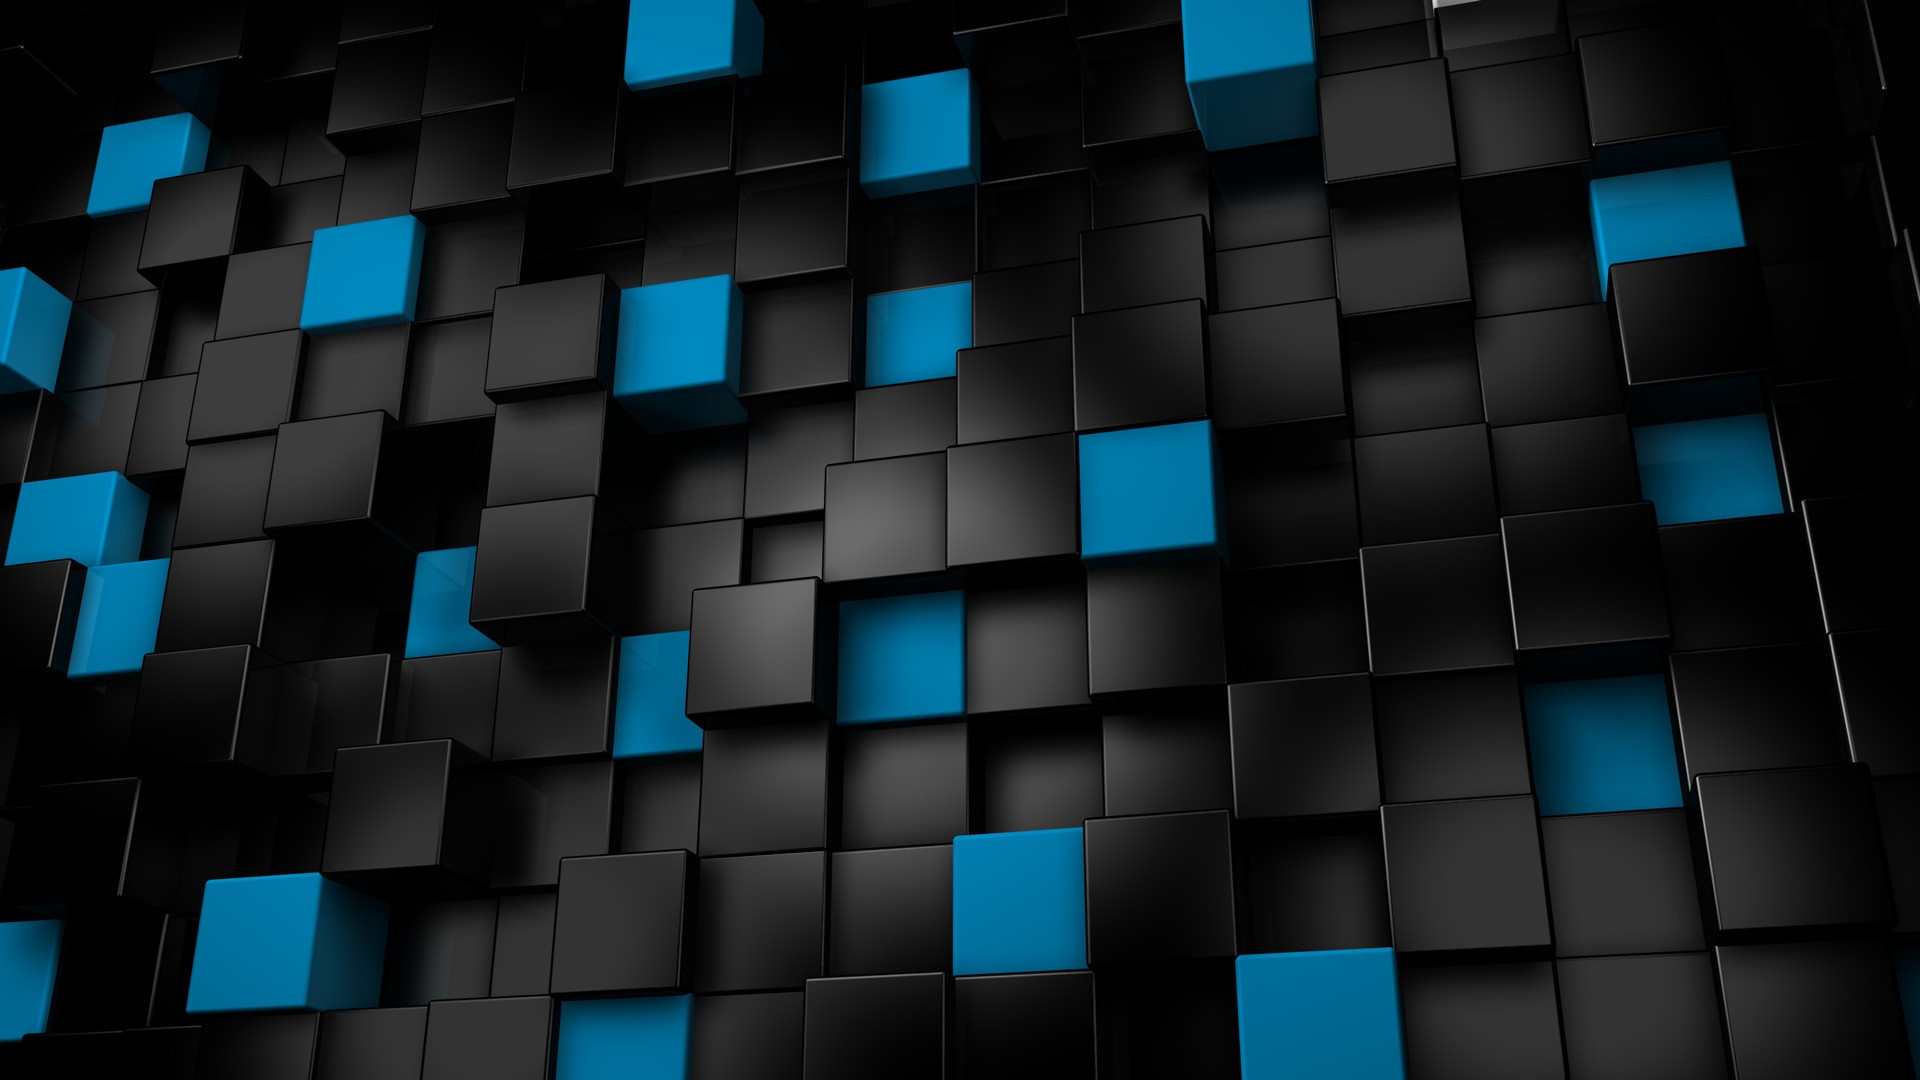 3d black cubes backgrounds wallpapers1 wallpapers55com   Best